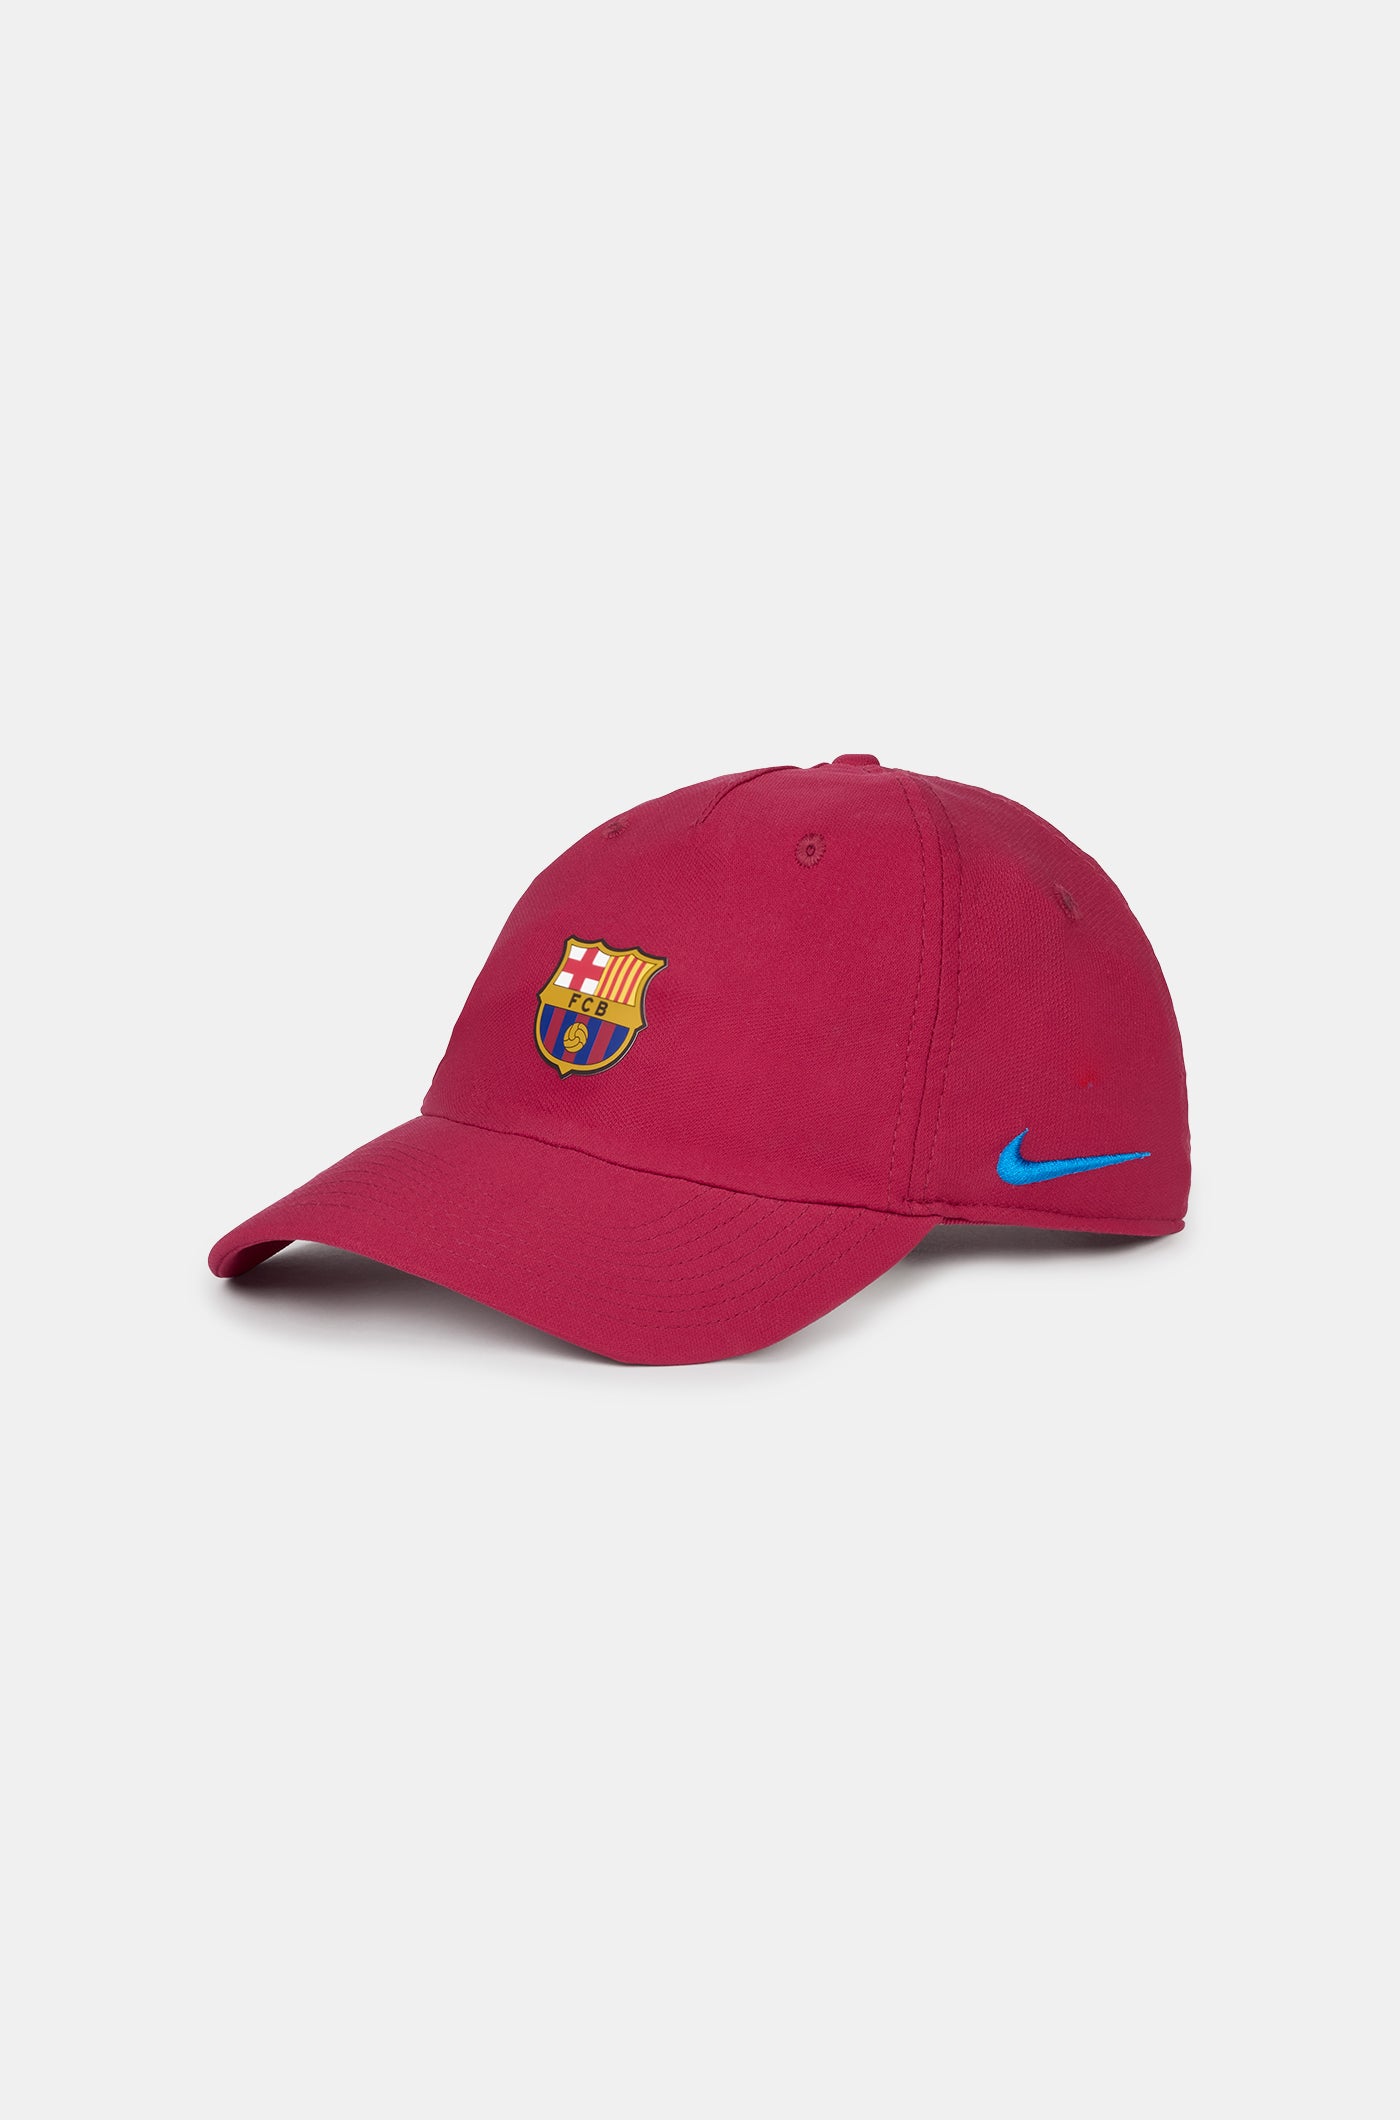 Granatrote Cap mit Wappen Barça Nike